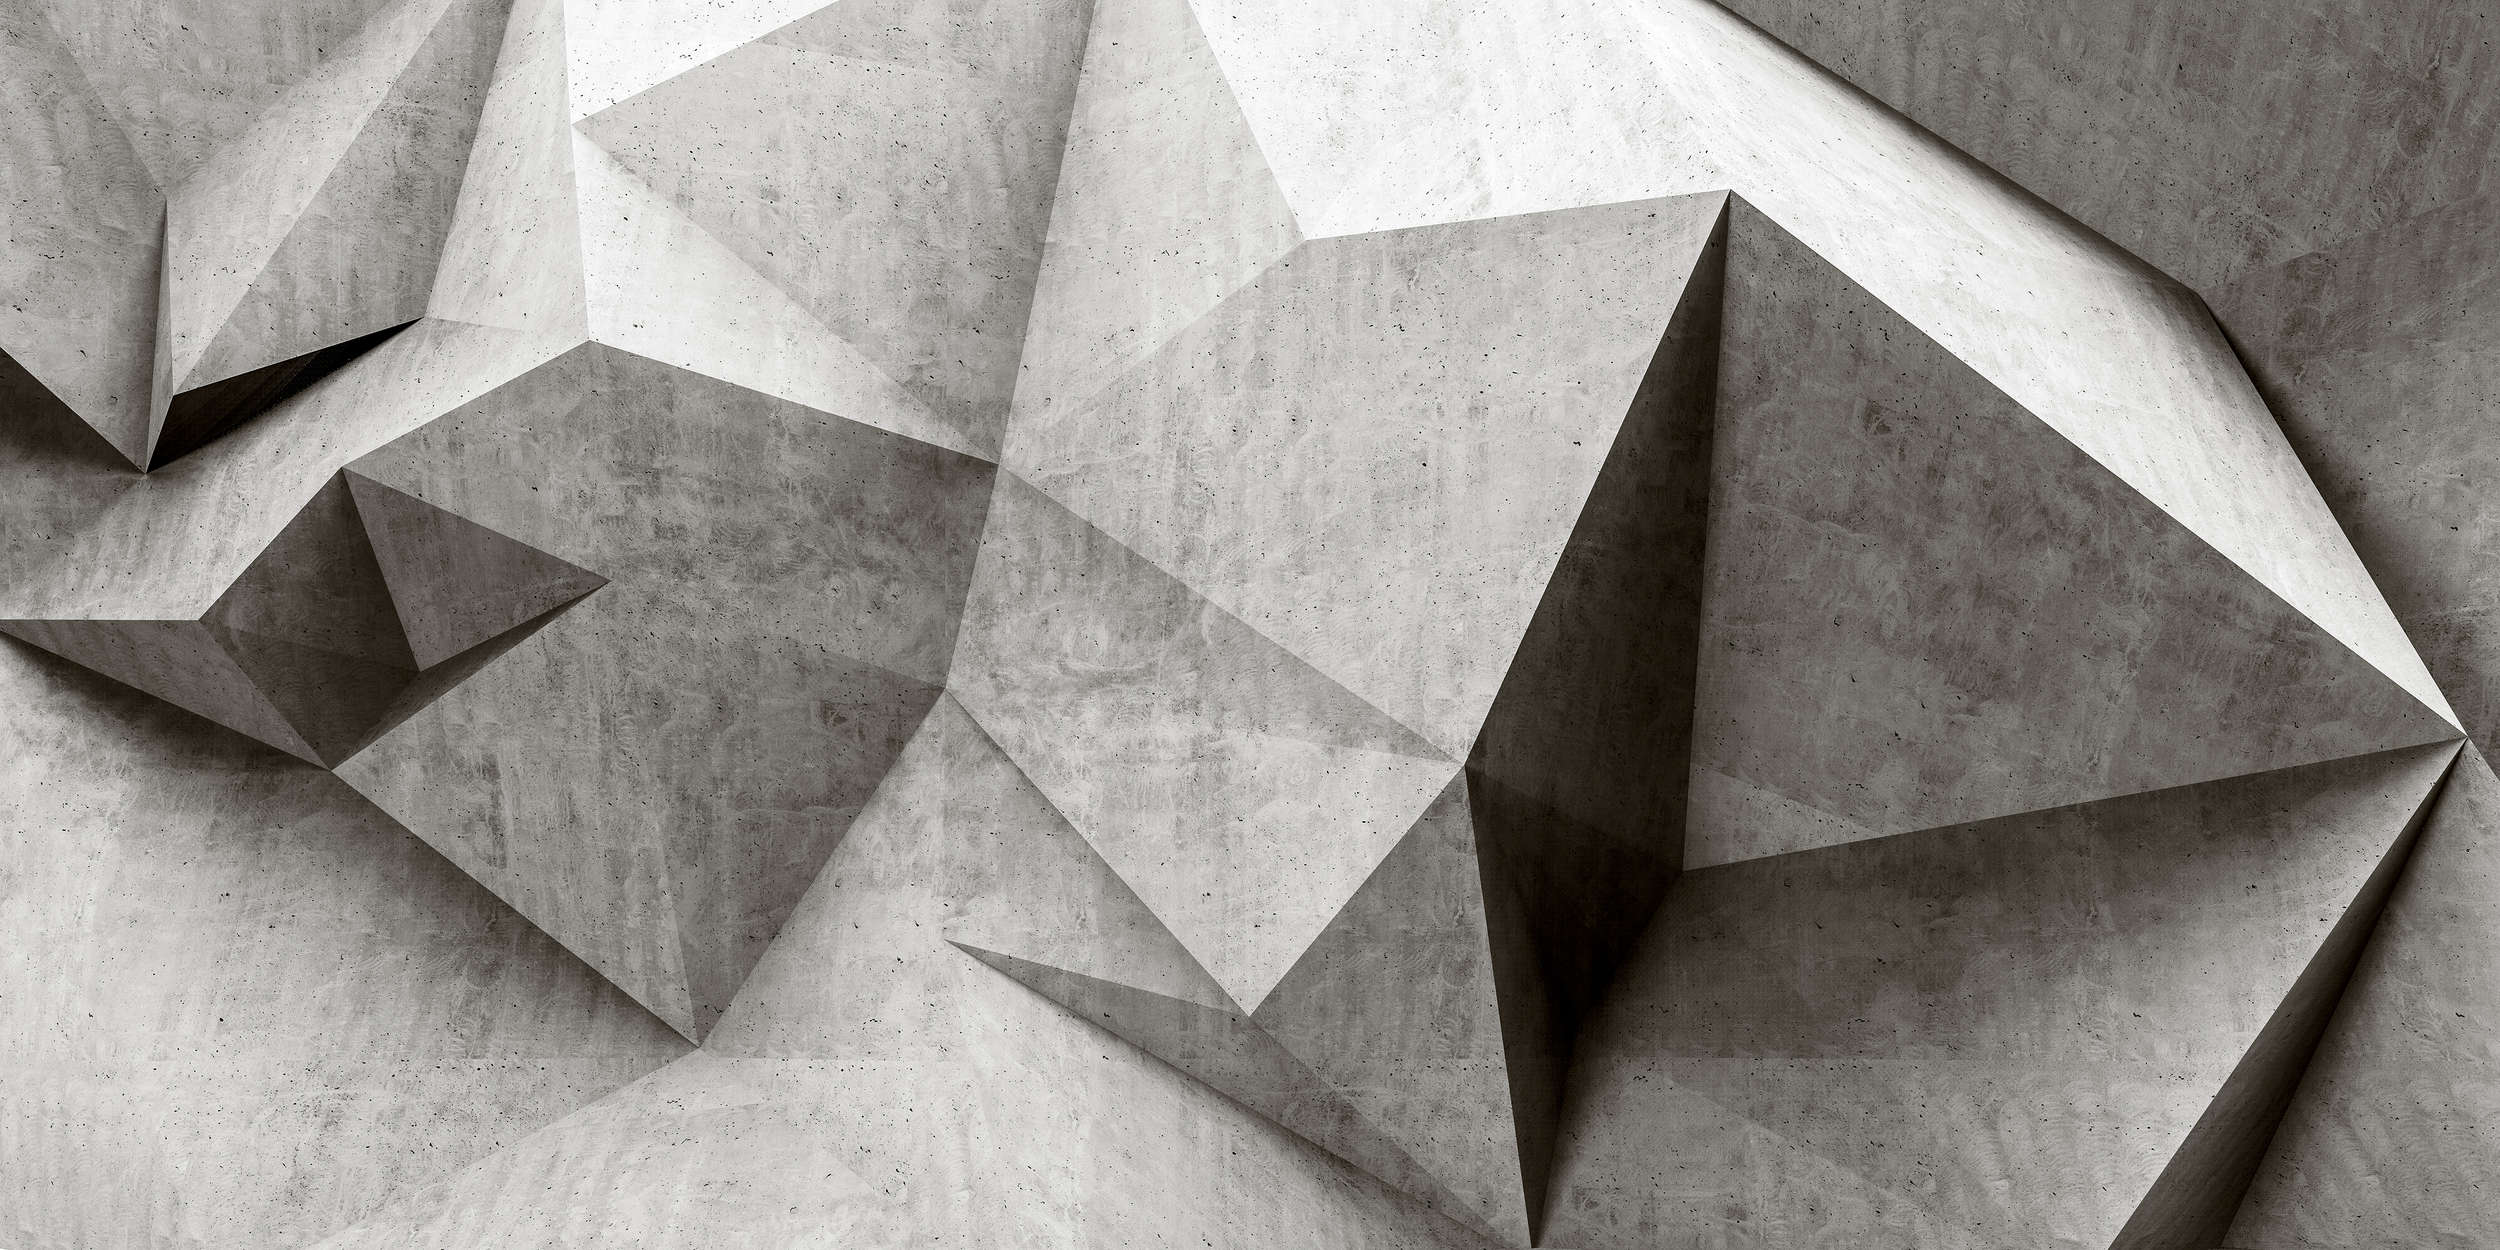             Boulder 1 - Coole 3D Beton-Polygone Fototapete – Grau, Schwarz | Premium Glattvlies
        